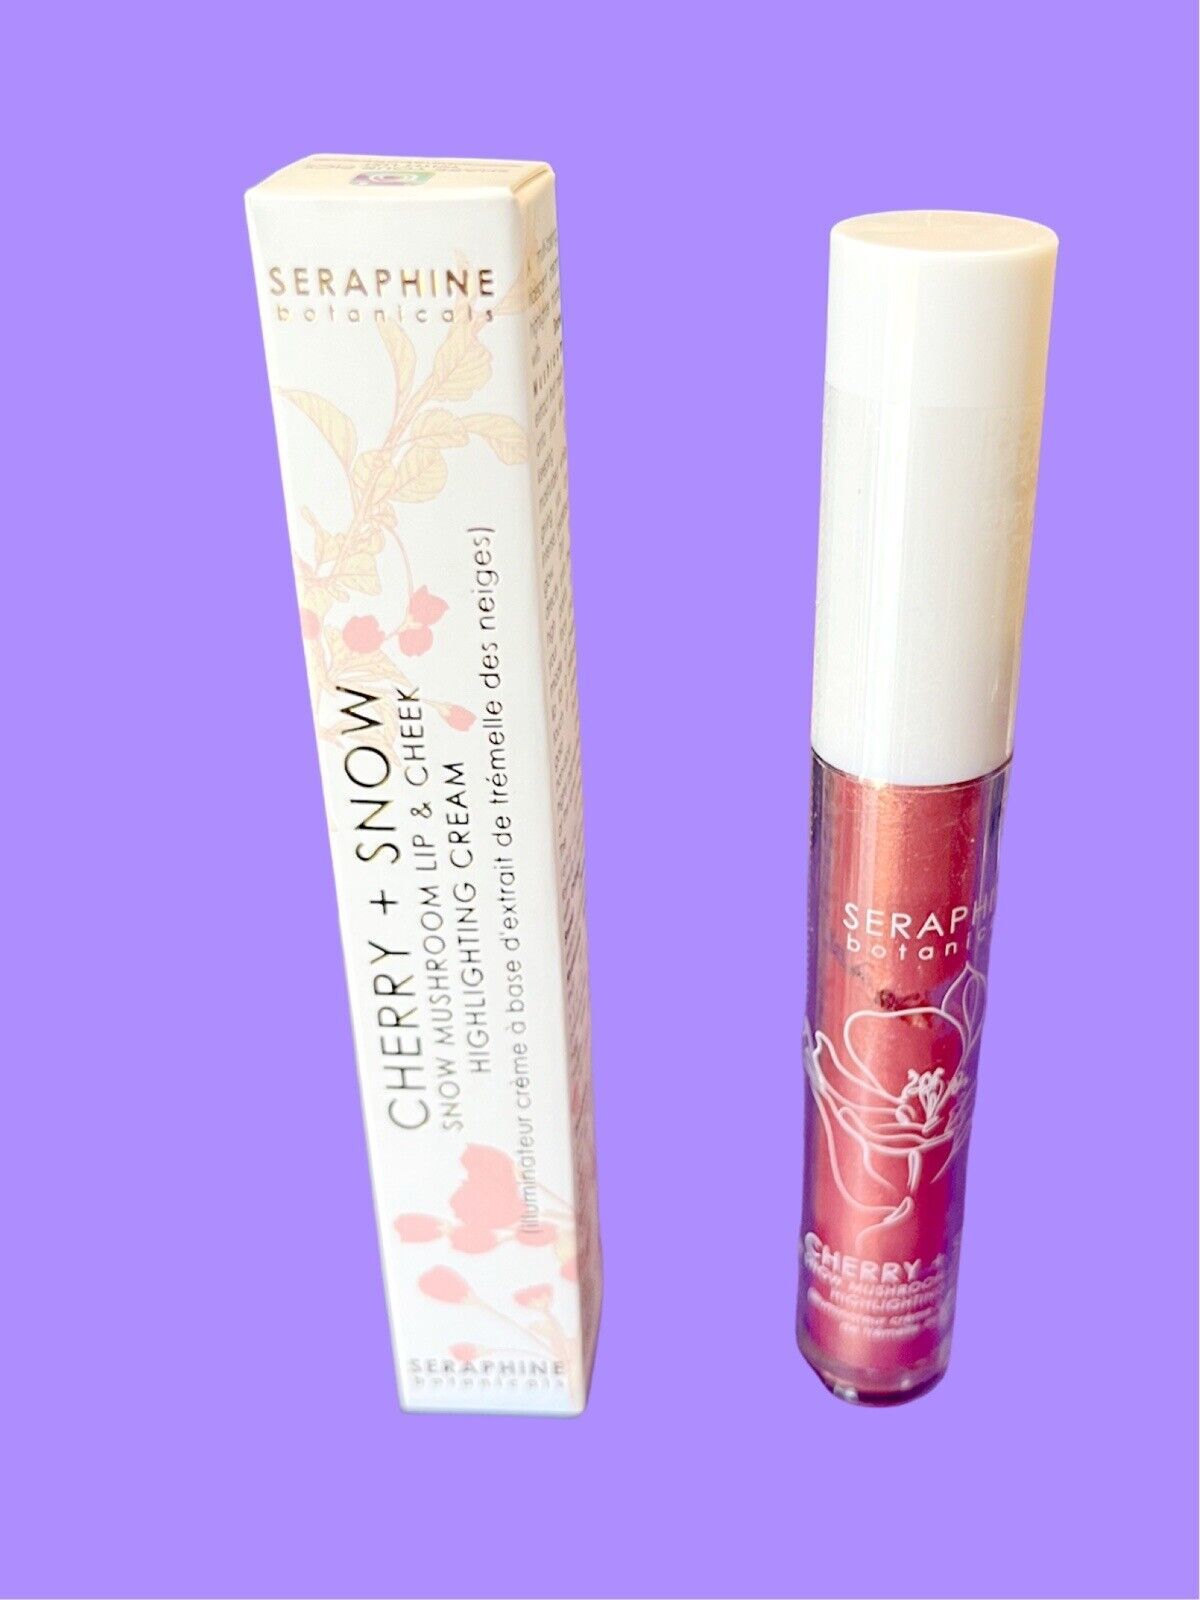 Primary image for Seraphine Botanicals Cherry + Snow Snow Mushroom Lip & Cheek Highlighting Cream